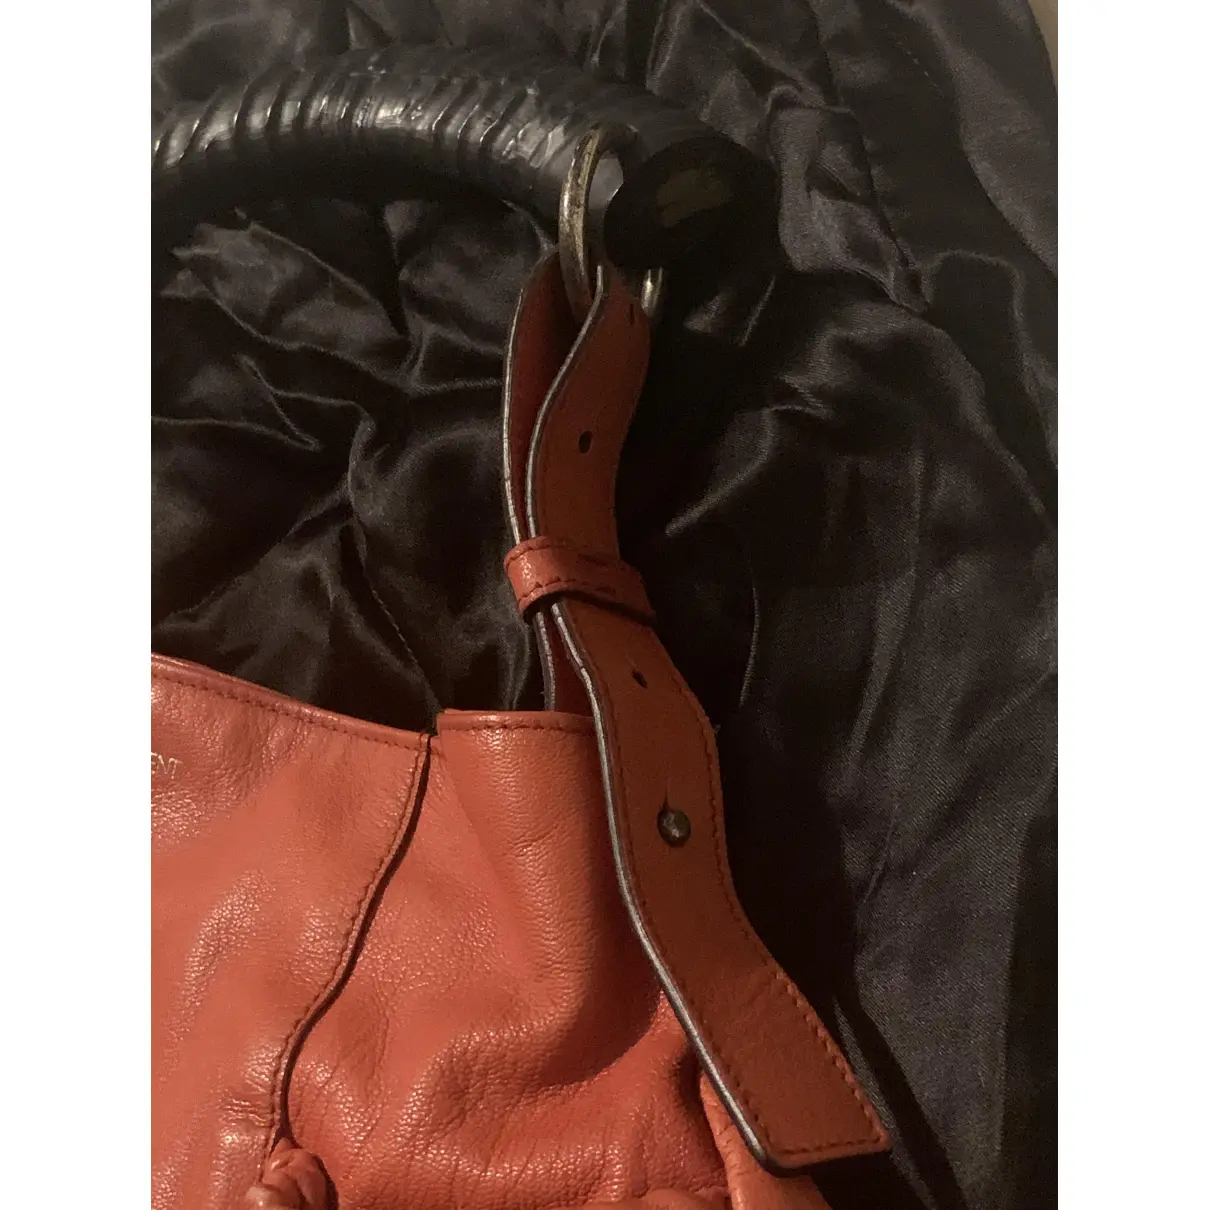 Buy Yves Saint Laurent Mombasa leather bag online - Vintage